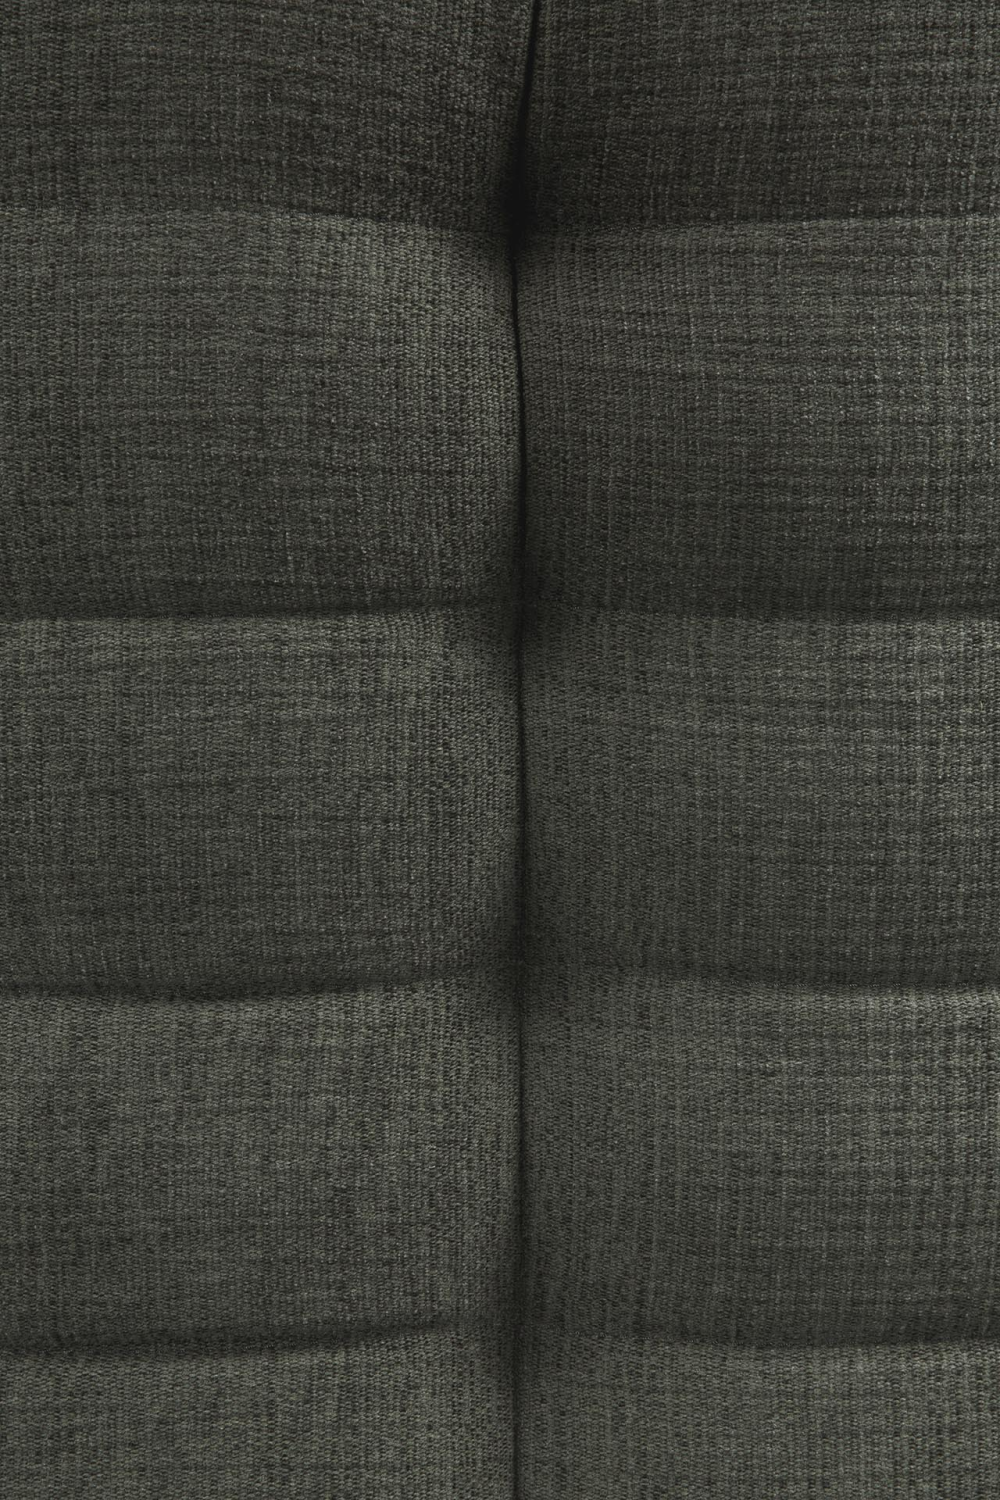 Green Modular Sofa | Ethnicraft N701 | Oroa.com